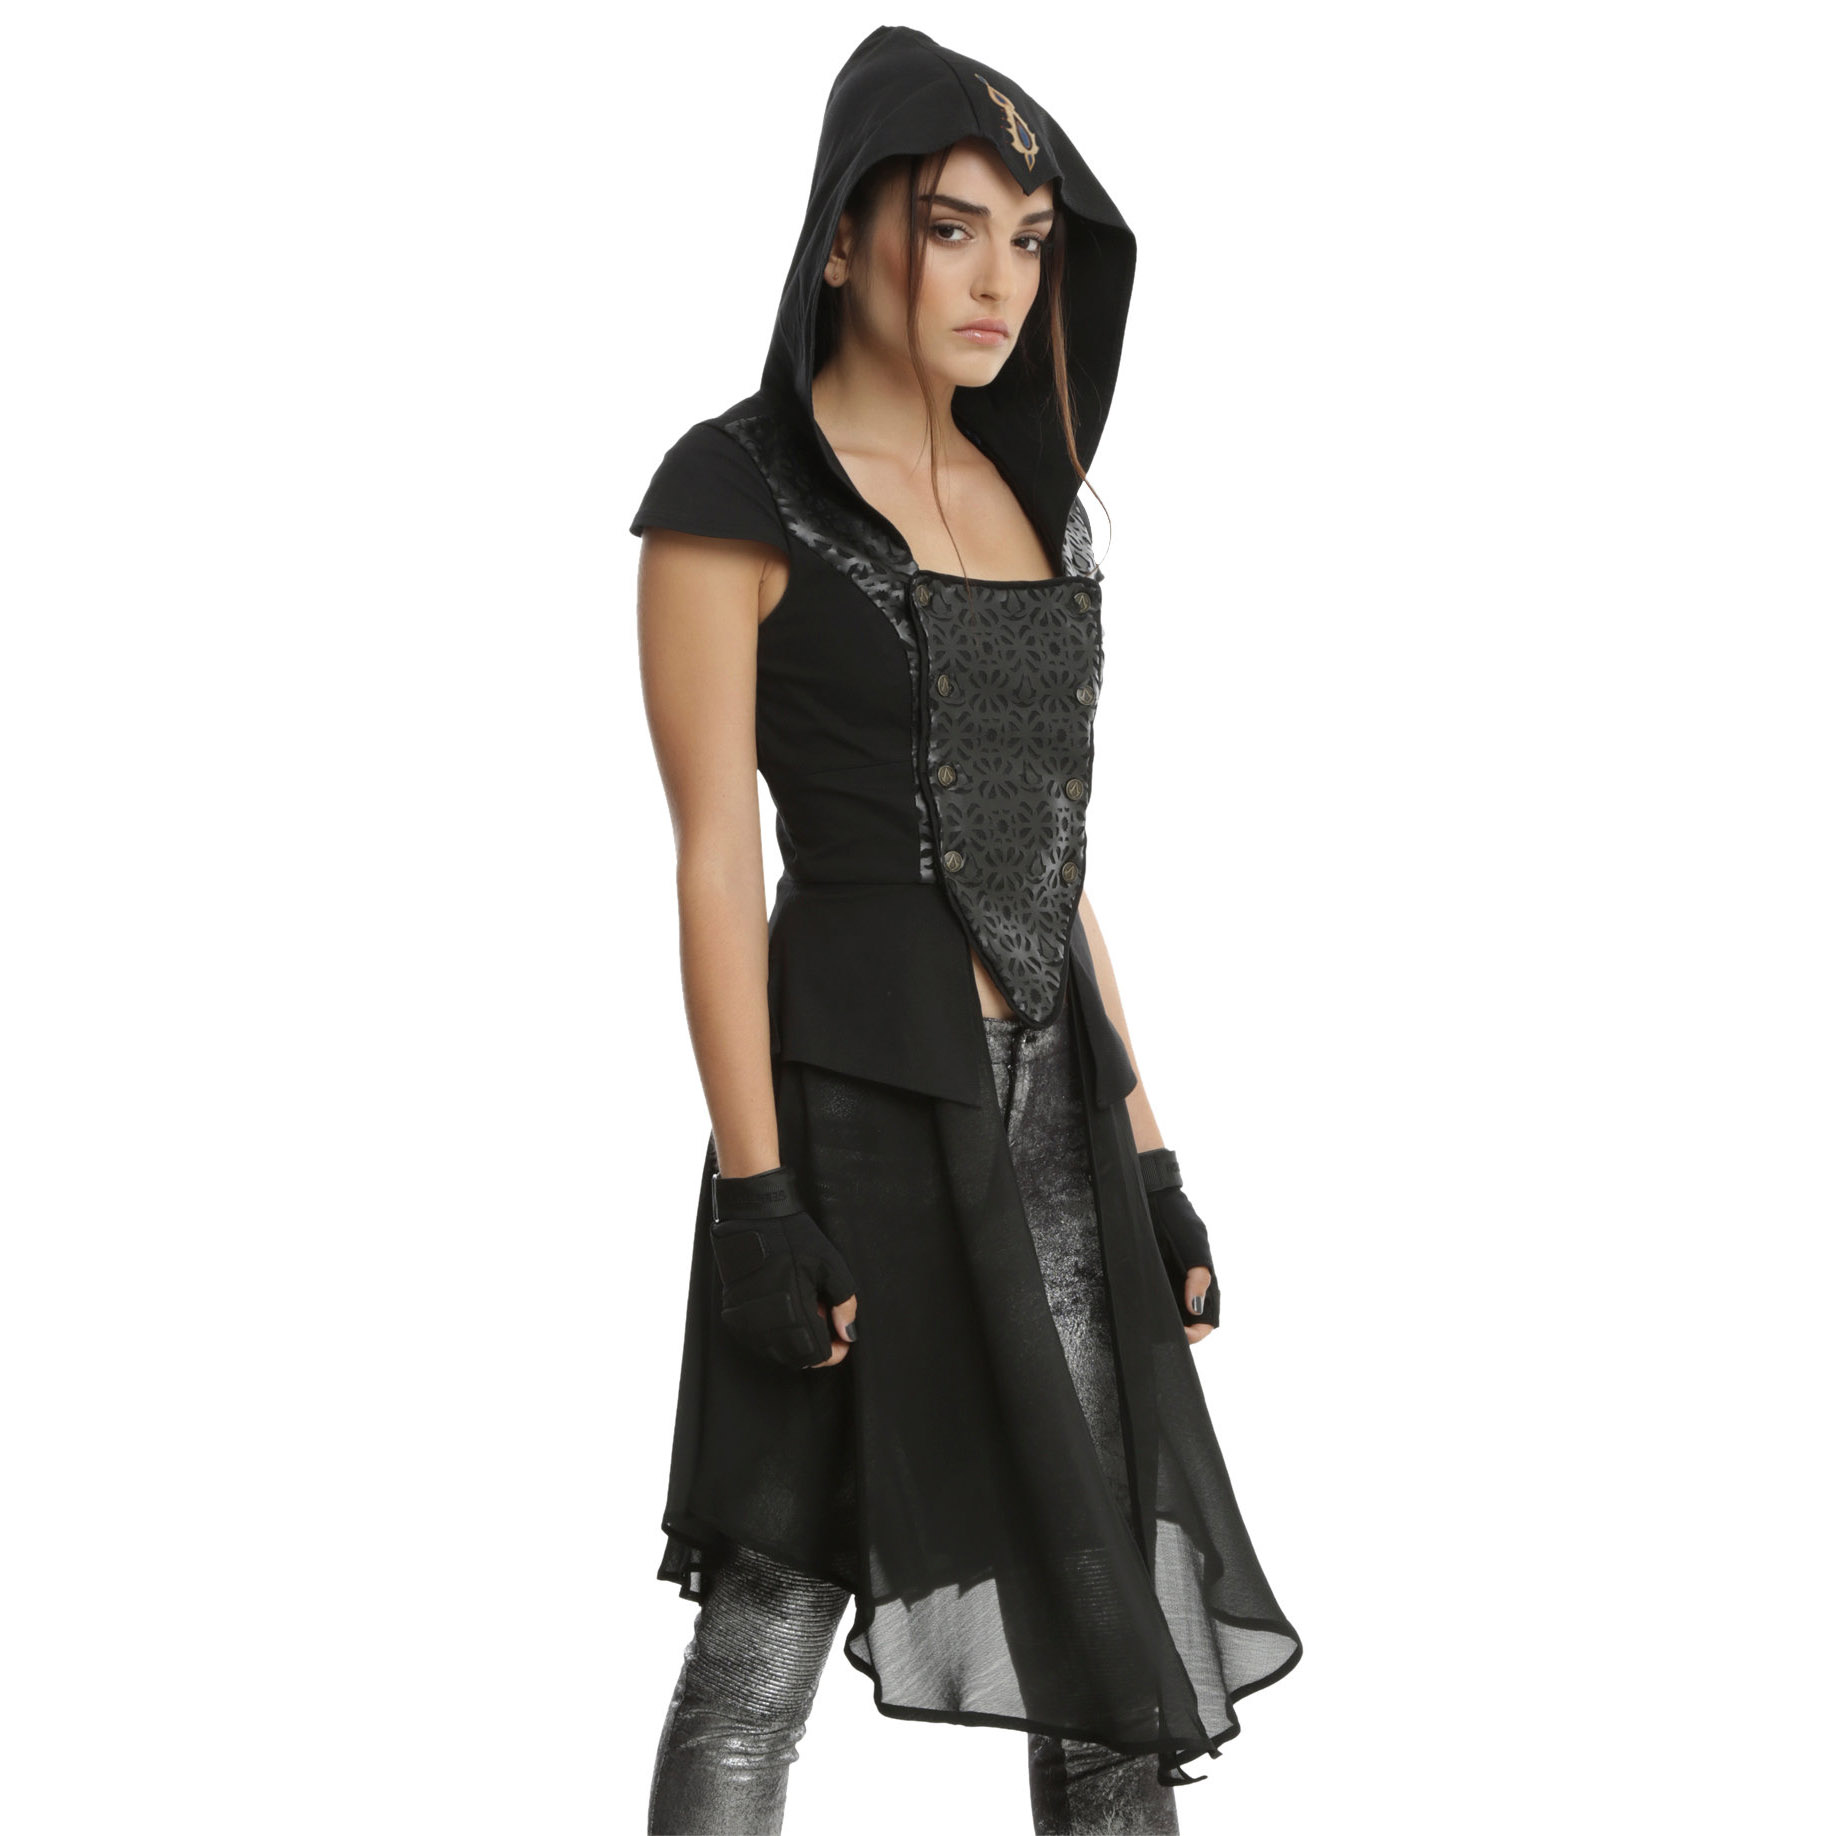 Custom Assassin's Creed Female Costume by Khloes Custom Clothing